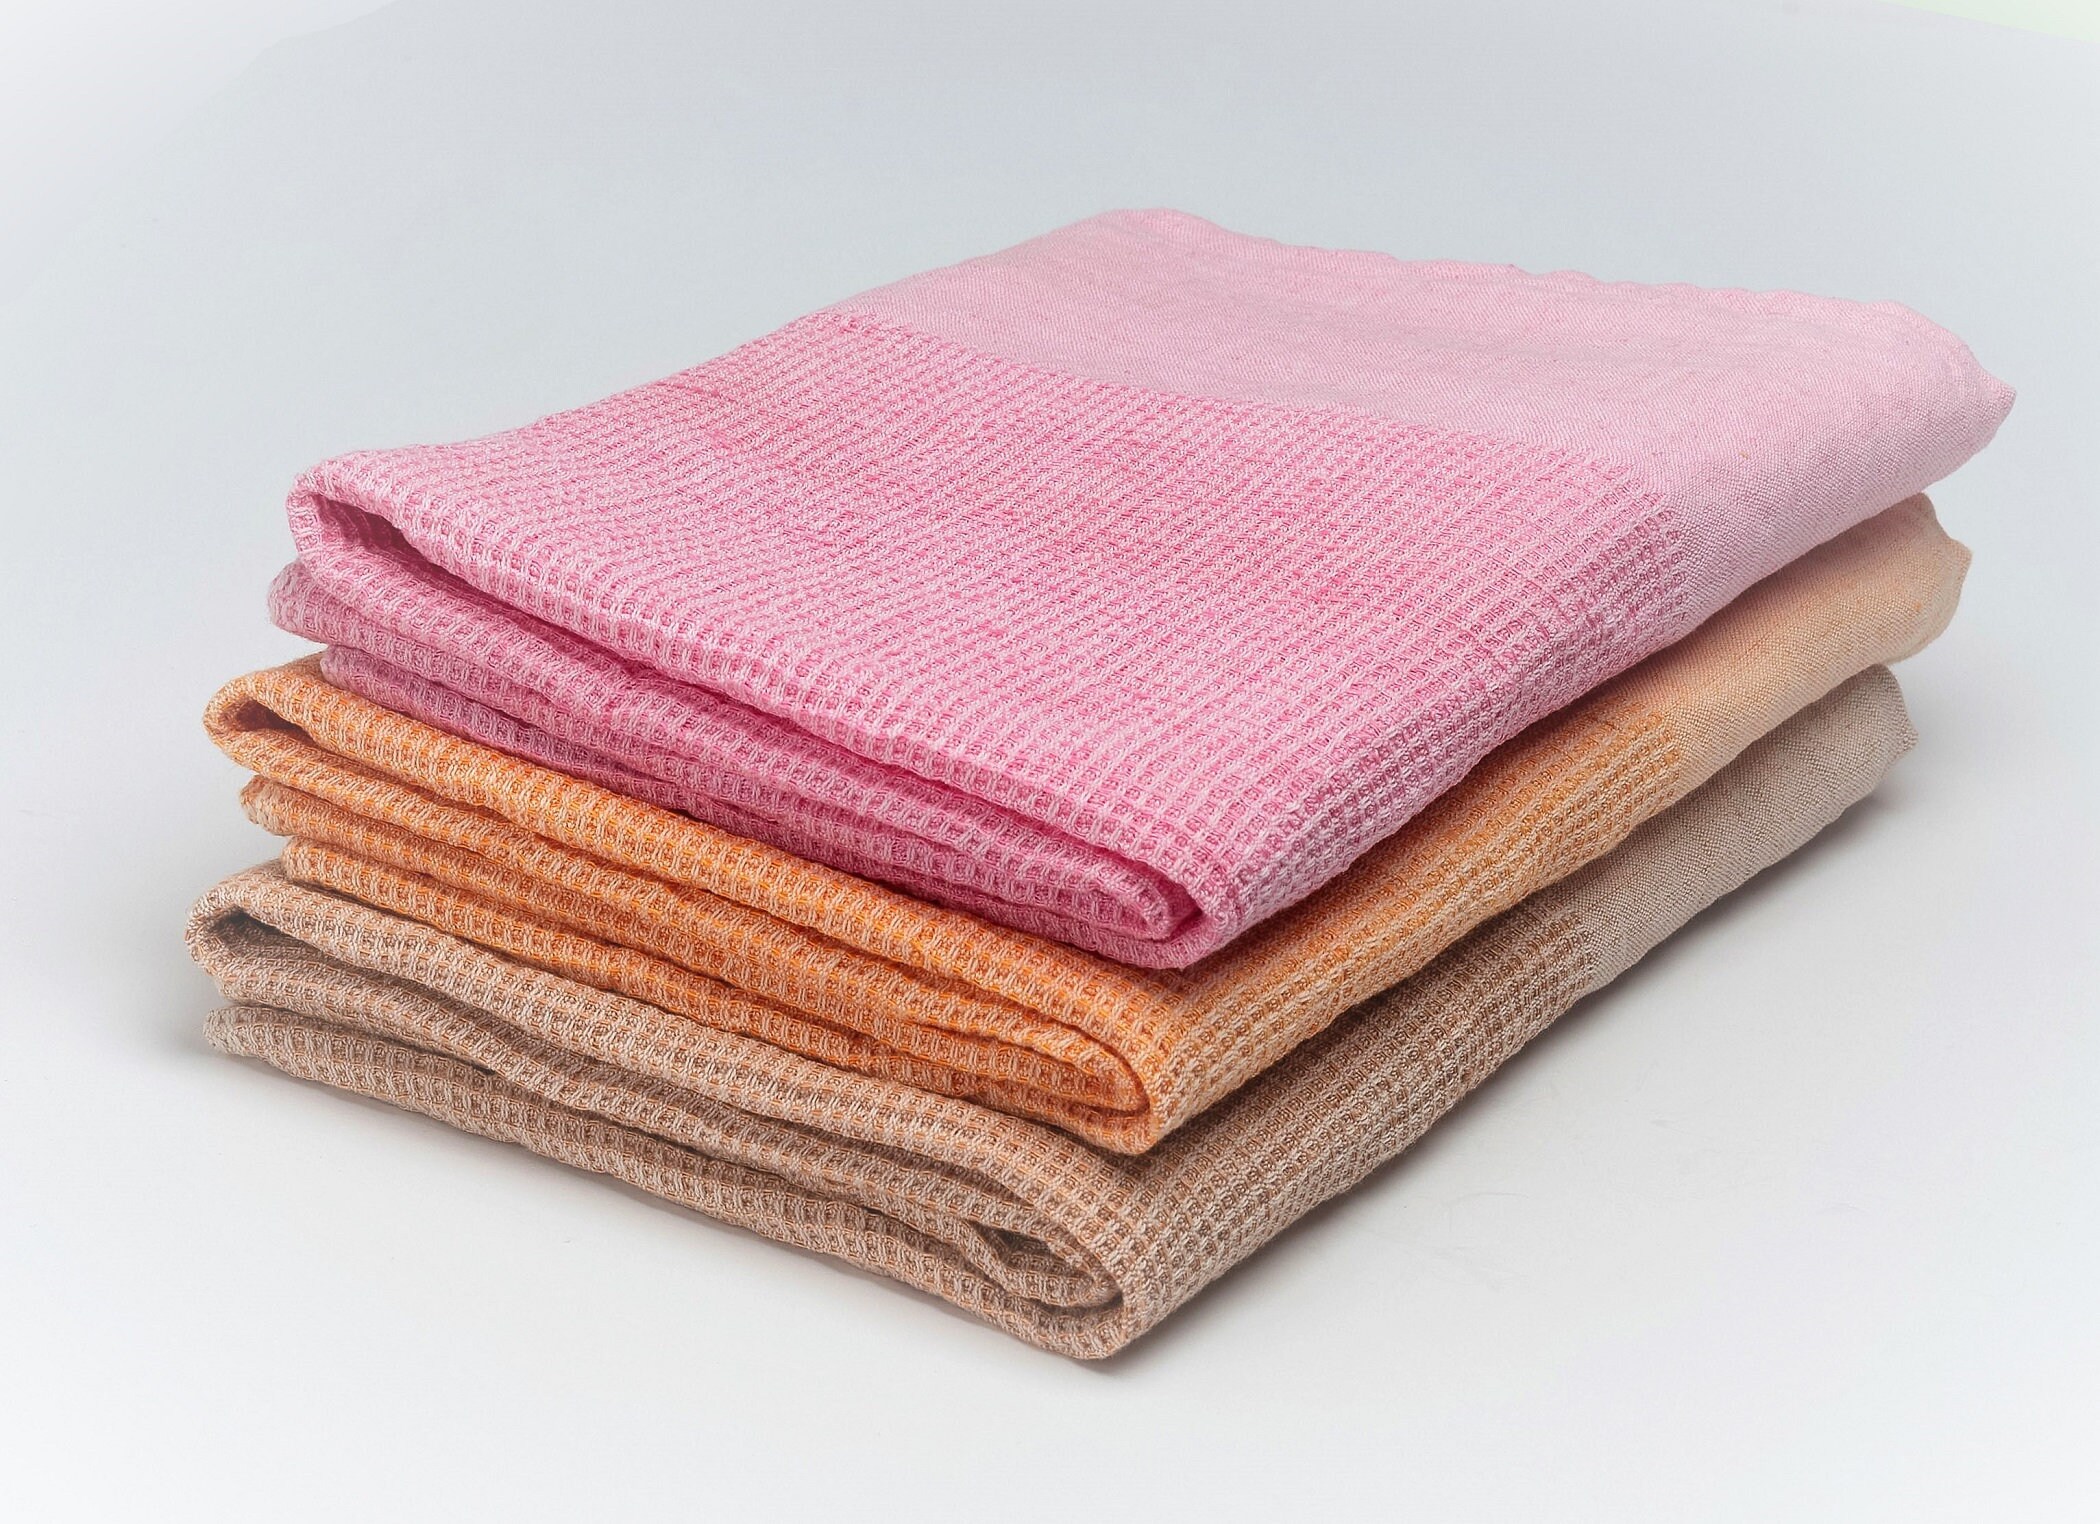 Anact Hemp Organic Bath Towels or Set, 2 Colors, 4 Sizes, 55% Hemp